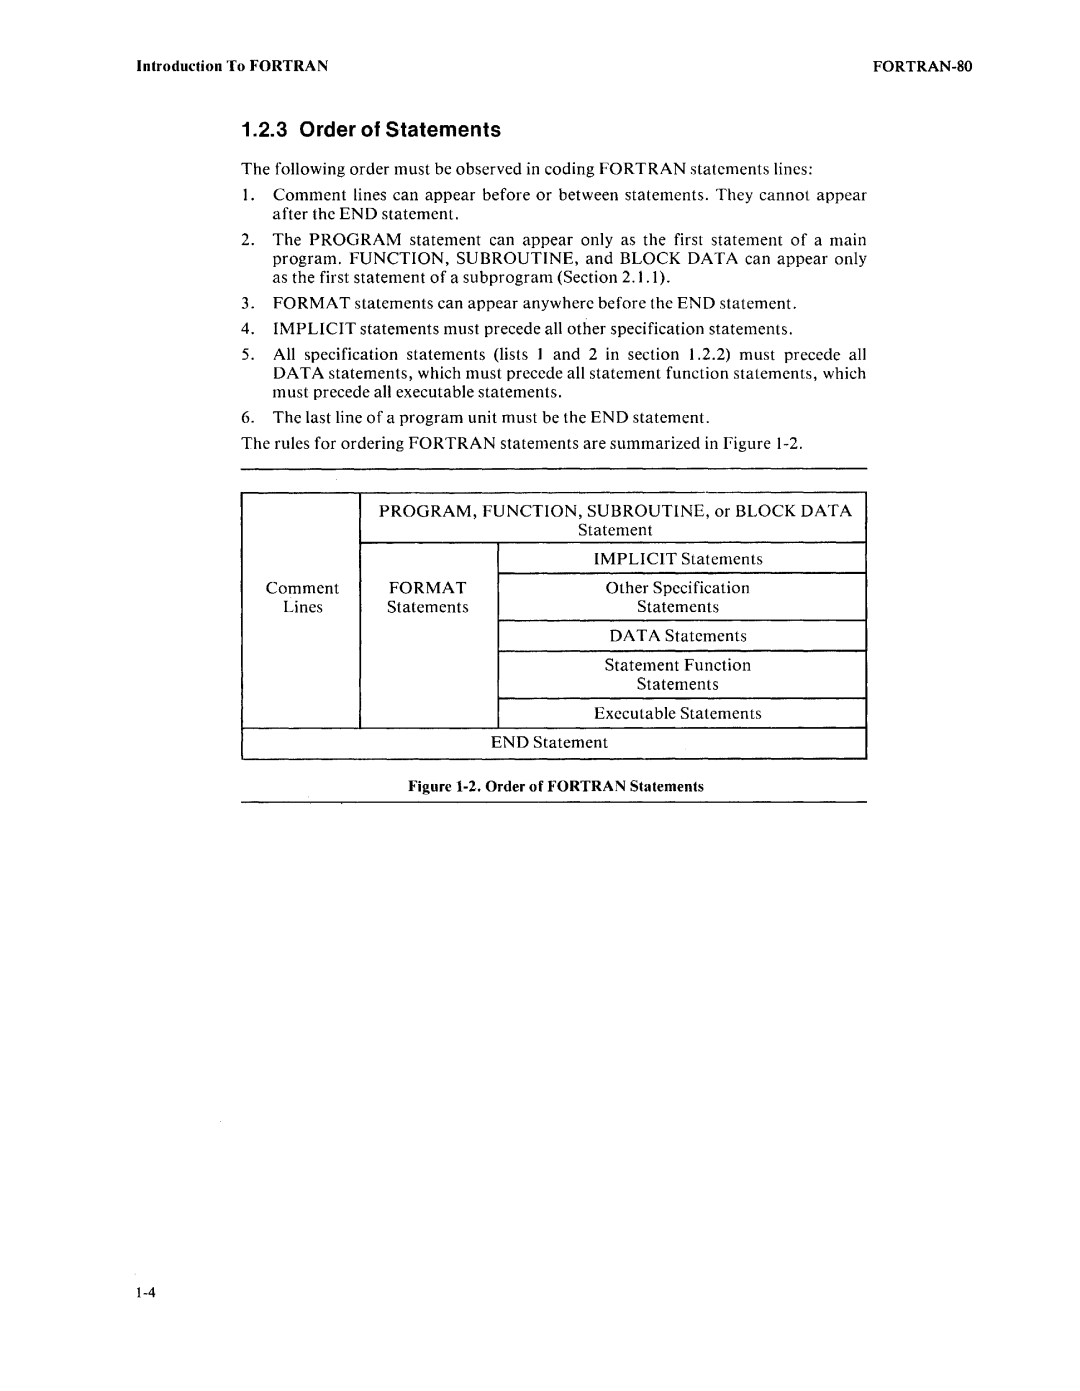 Intel fortran-80 manual Order of Statements 